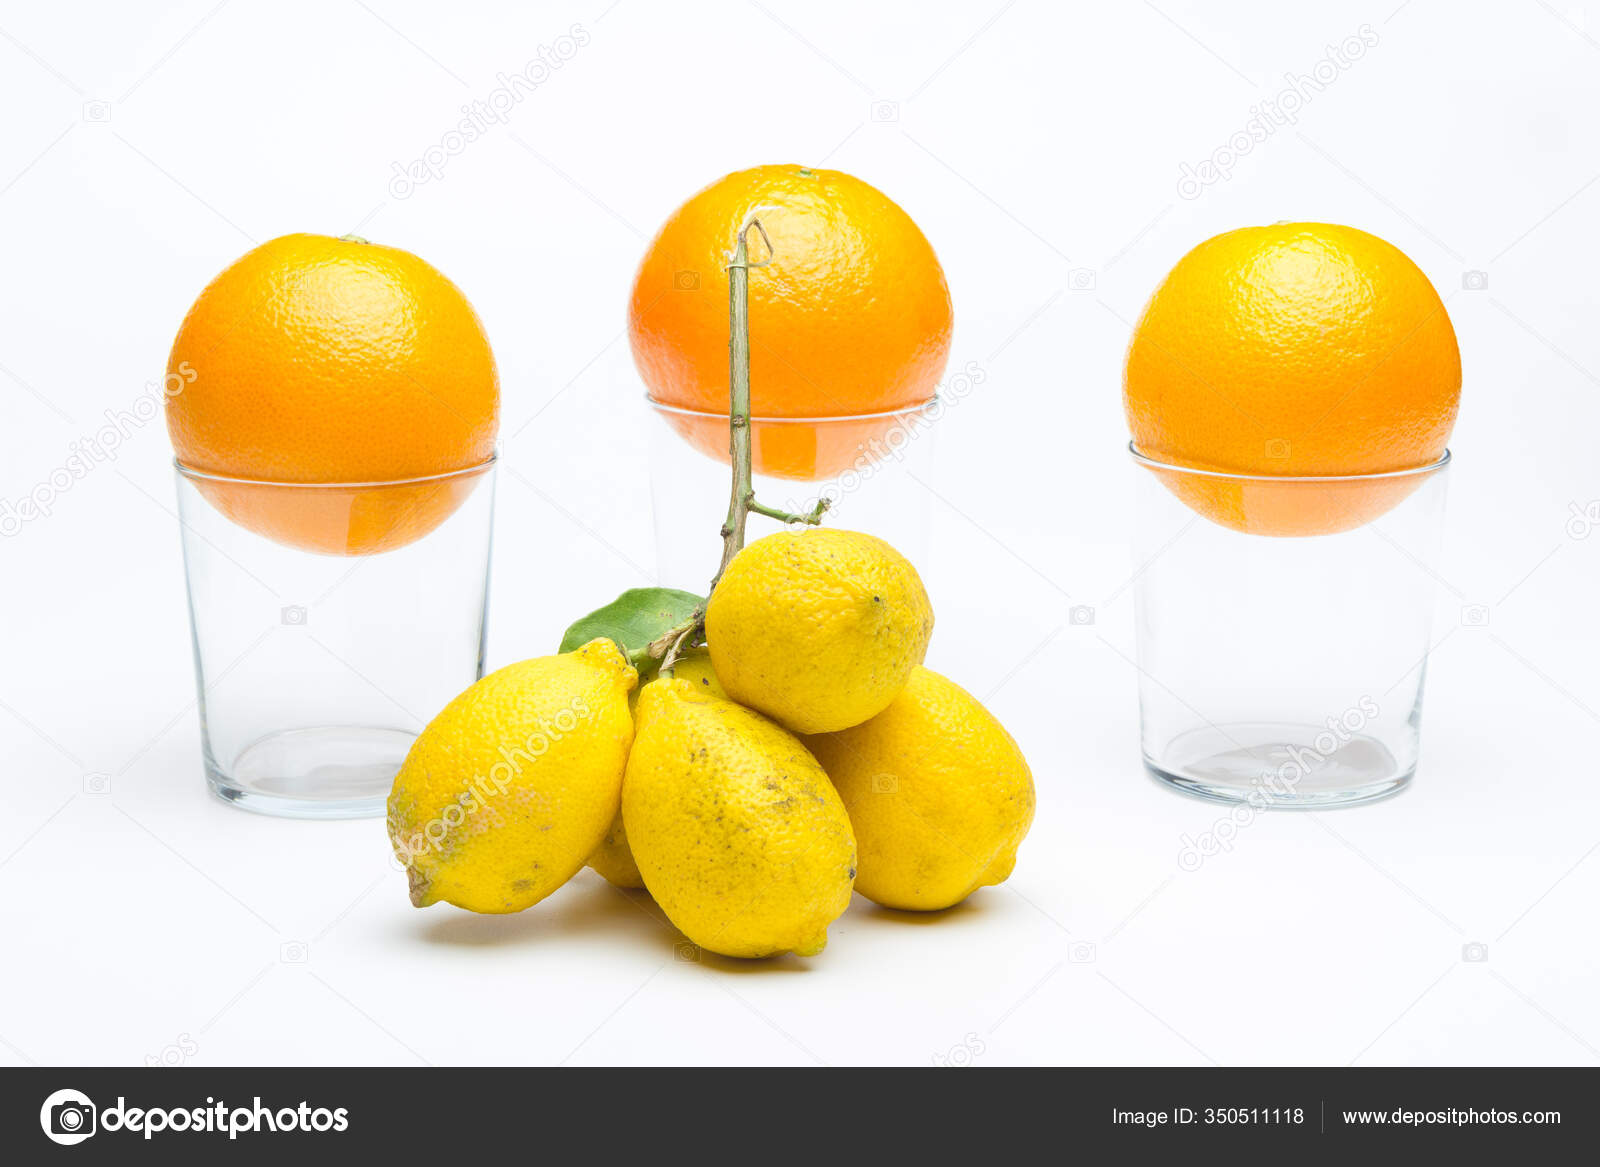 Citrus Fruits Oranges Lemons Orange Peel Oranges Lemon Peel Yellow Stock Photo C Jorgebotella